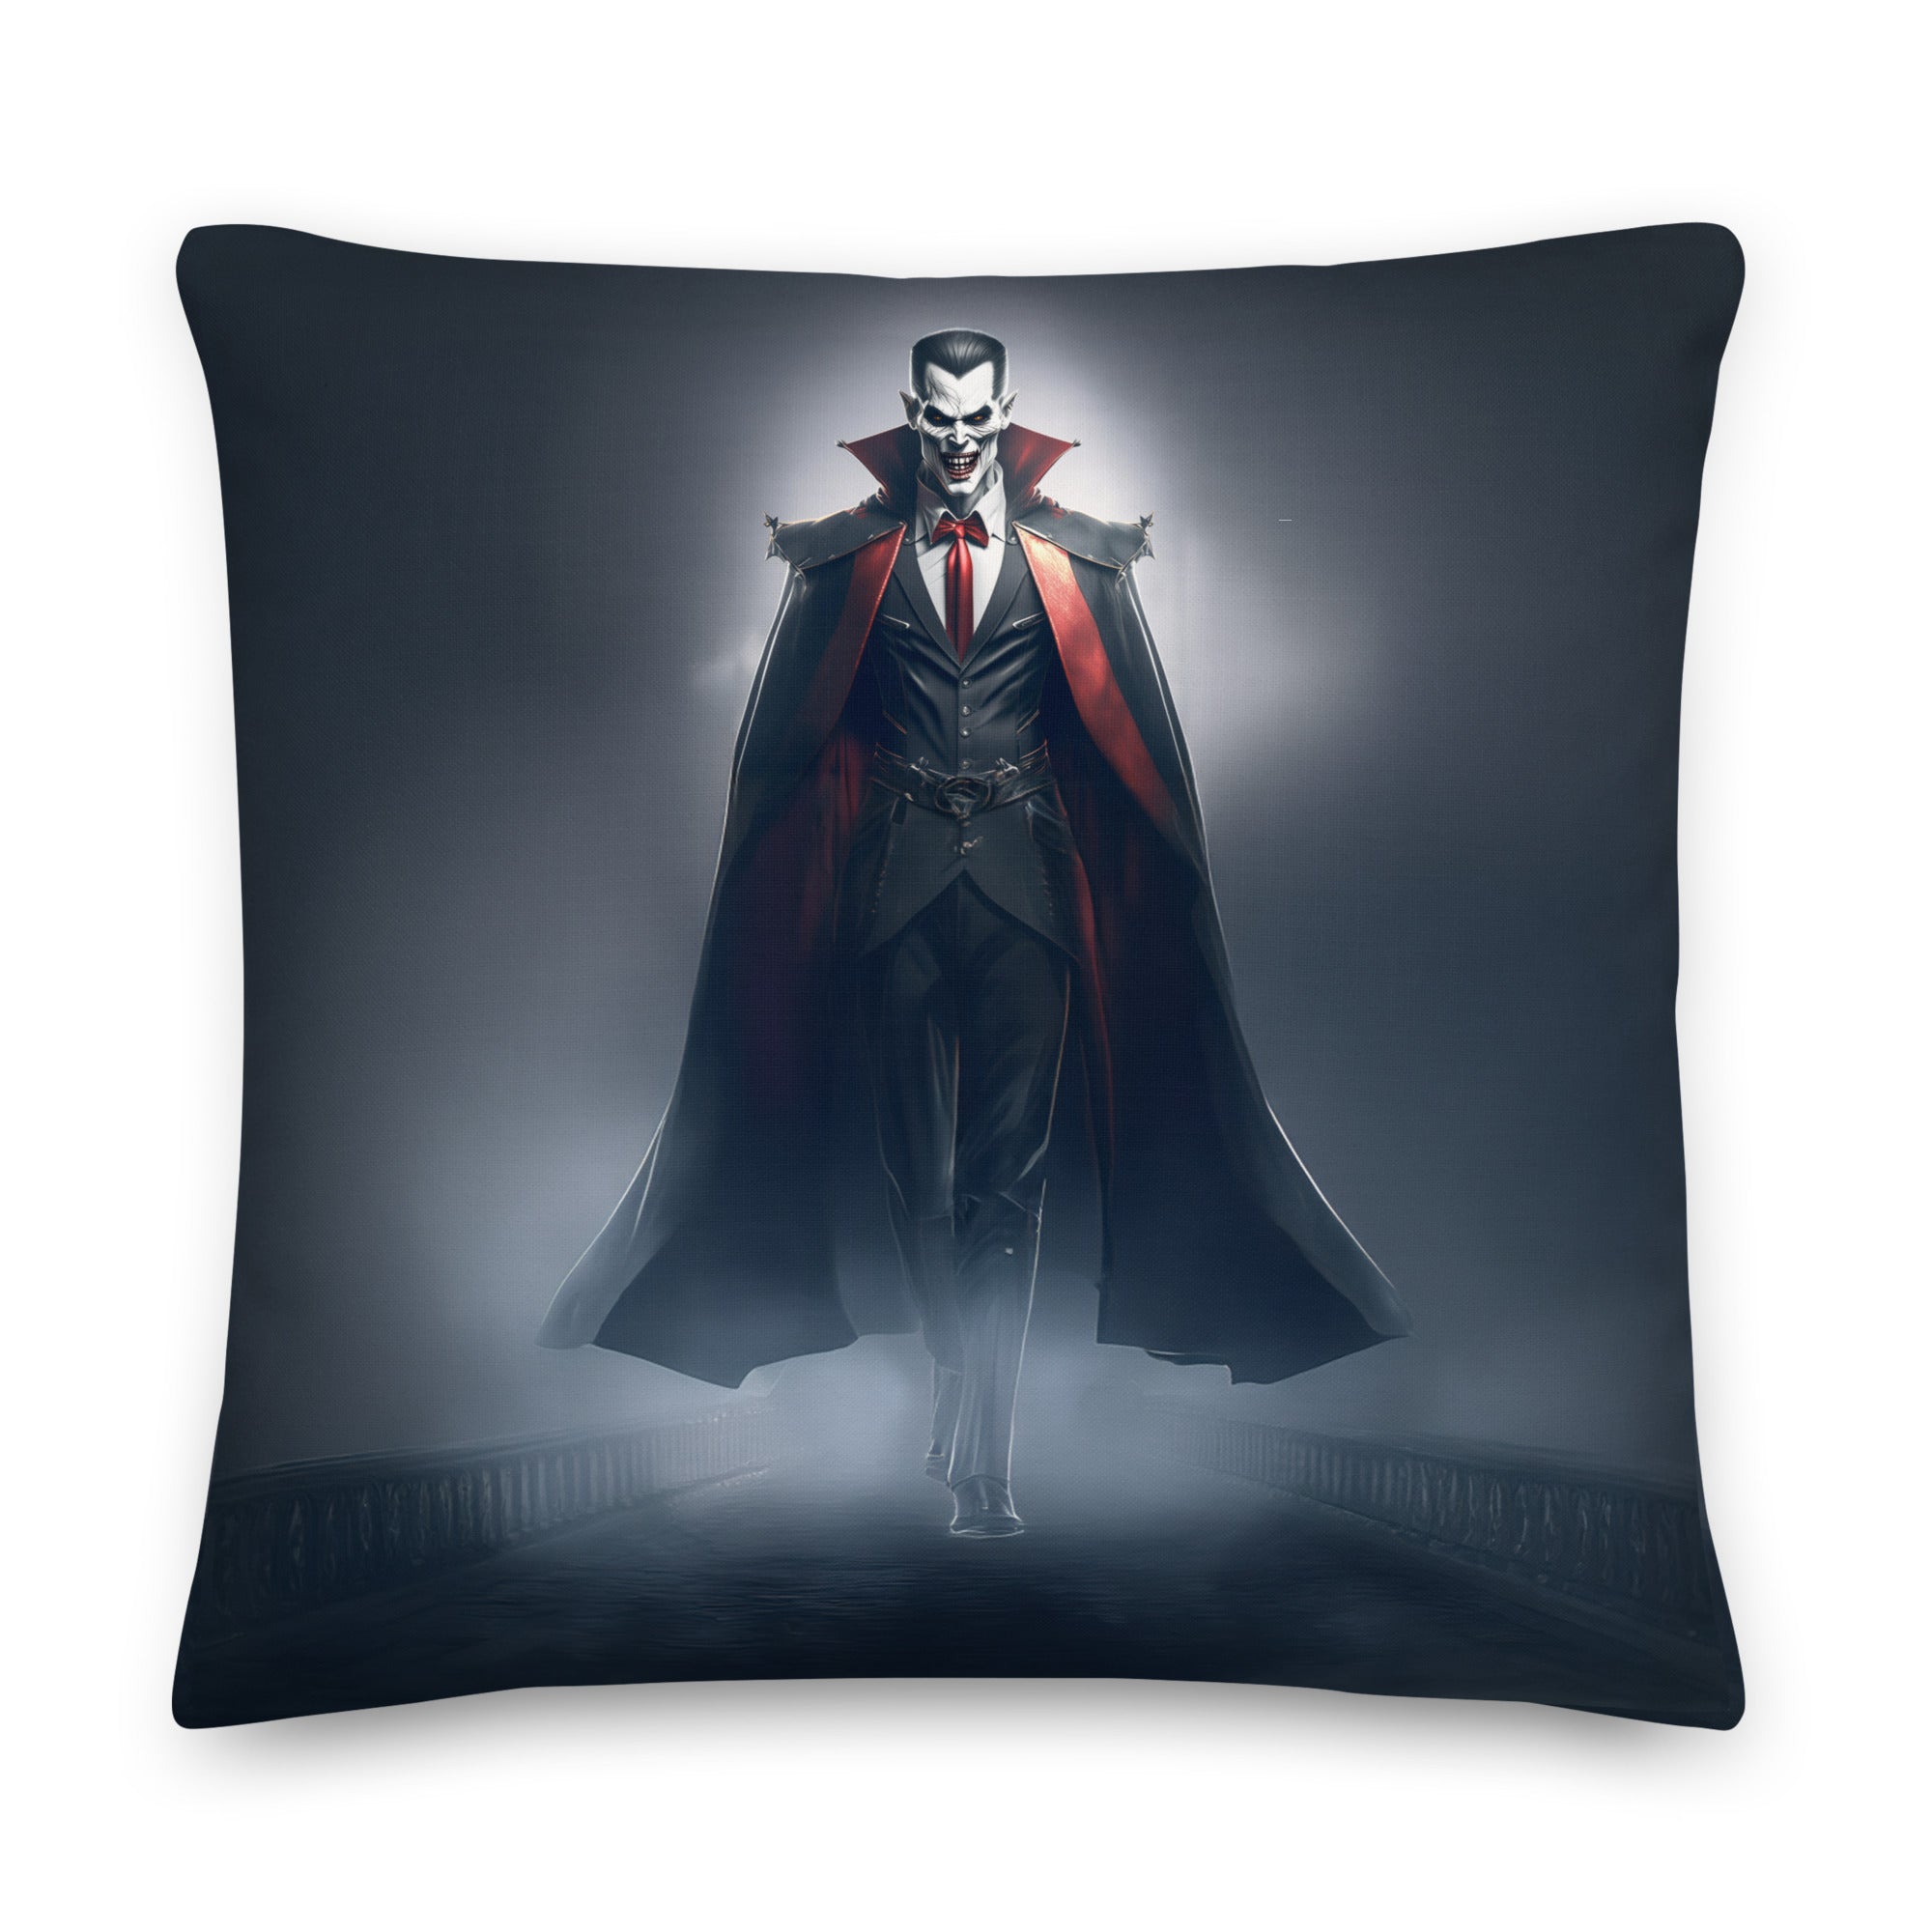 The Monster Squad "Dracula" Premium Pillow